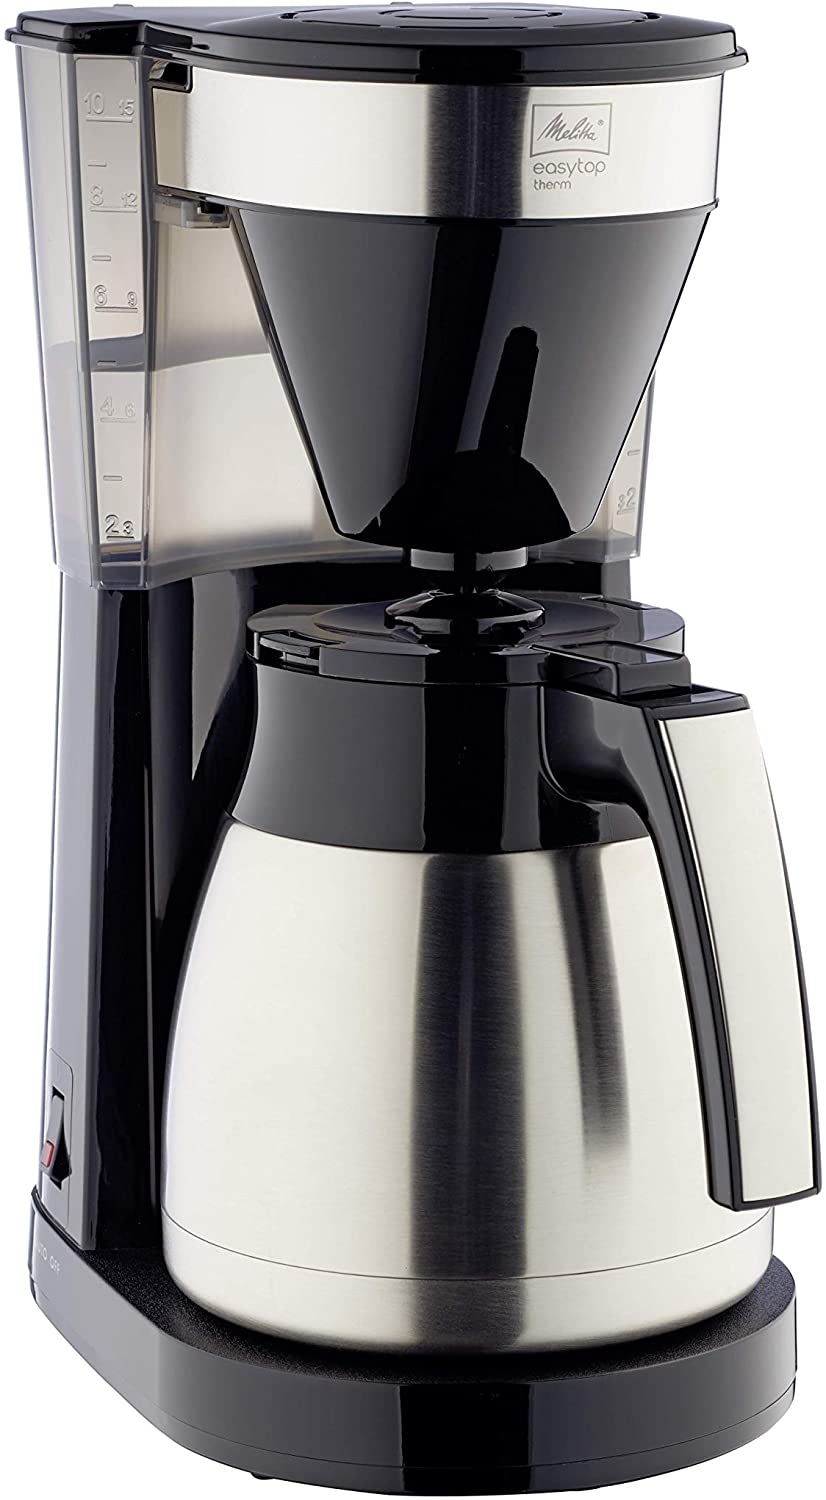 Melitta 6764913 1023-10 EasyTop Therm Steel Filter Coffee Machine, Stainless Steel, Plastic, Black